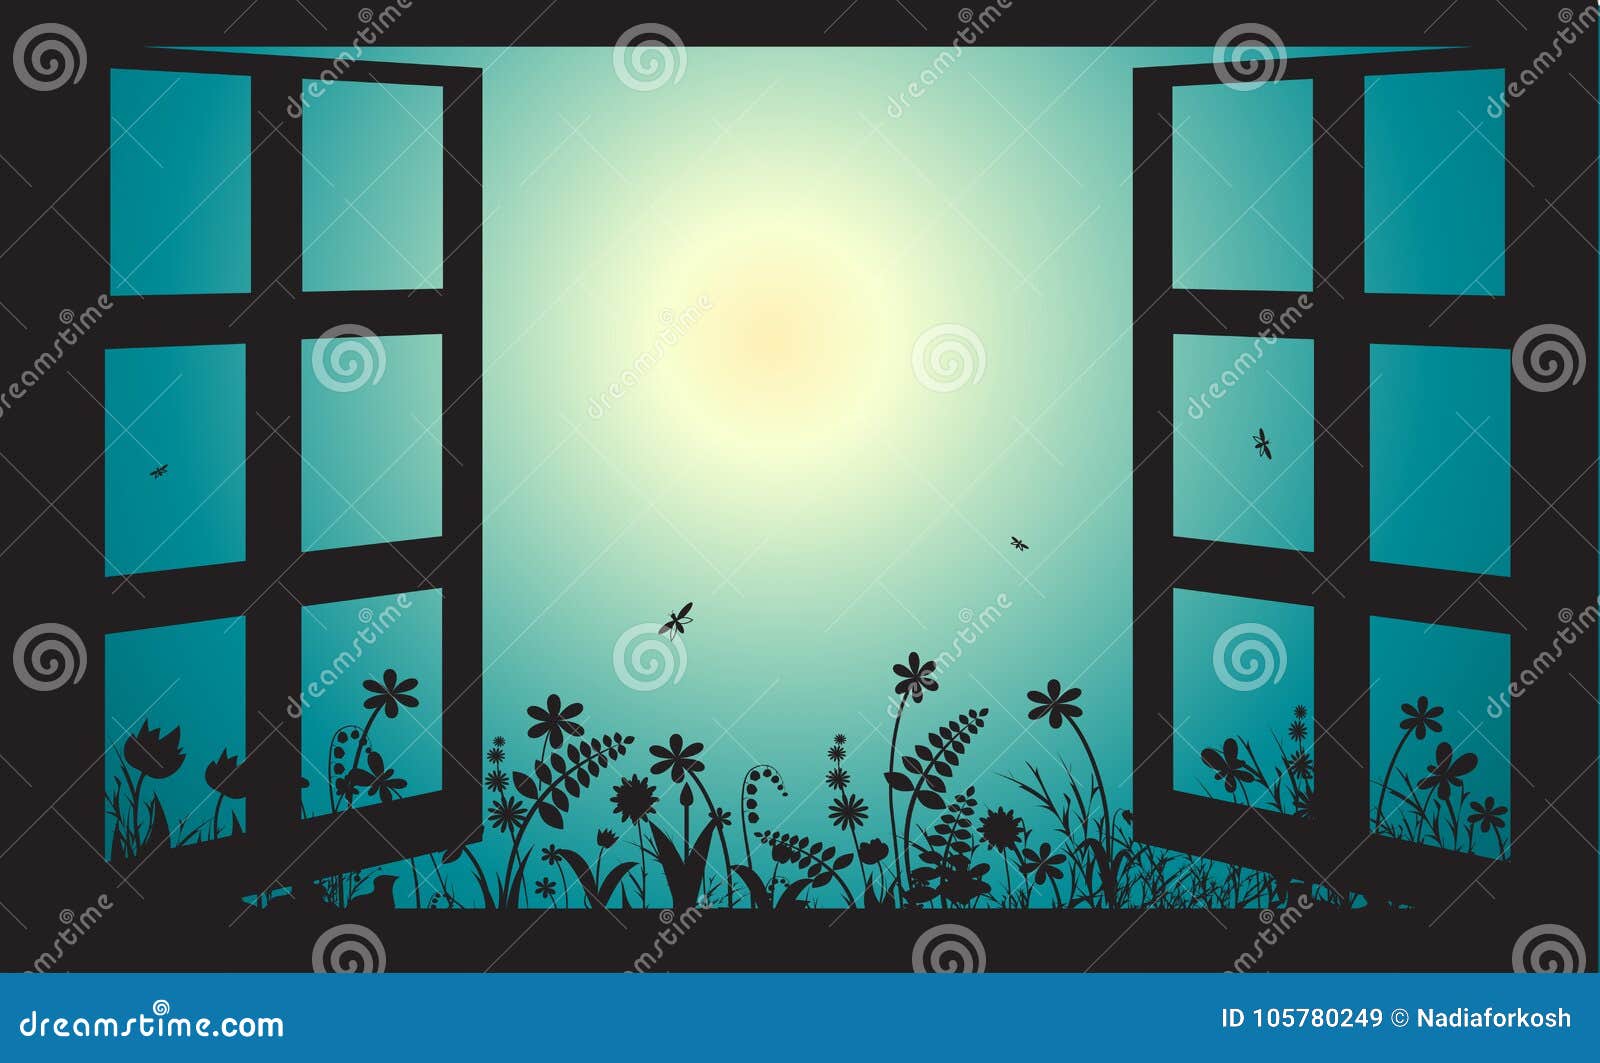 Open Window In Early Morning Summer Garden, Sun Rise, Stock Vector ... Open Window At Morning